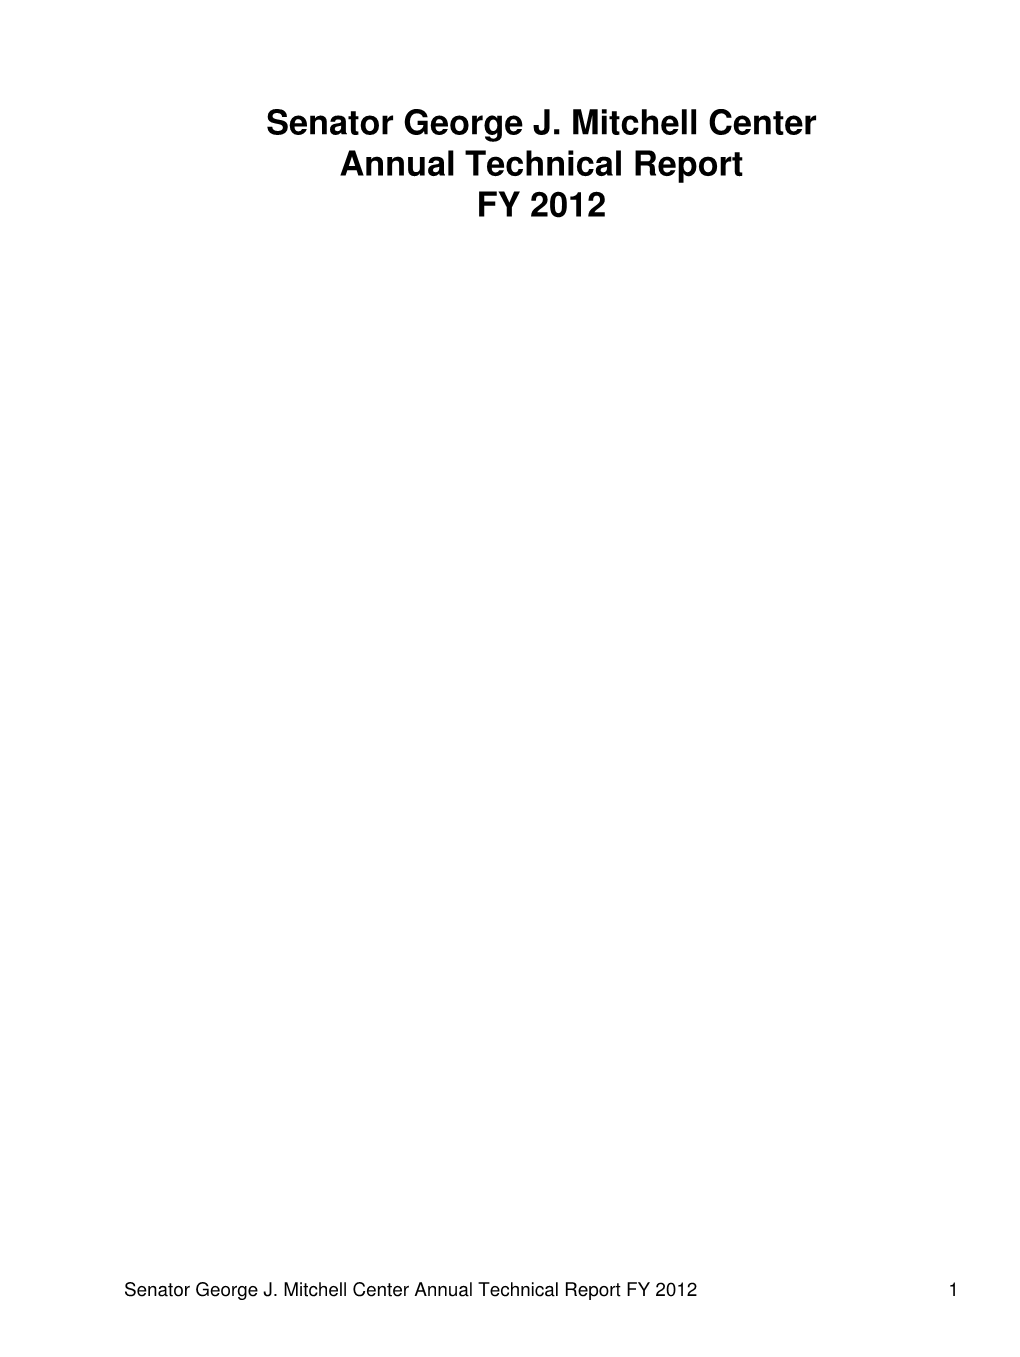 Senator George J. Mitchell Center Annual Technical Report FY 2012